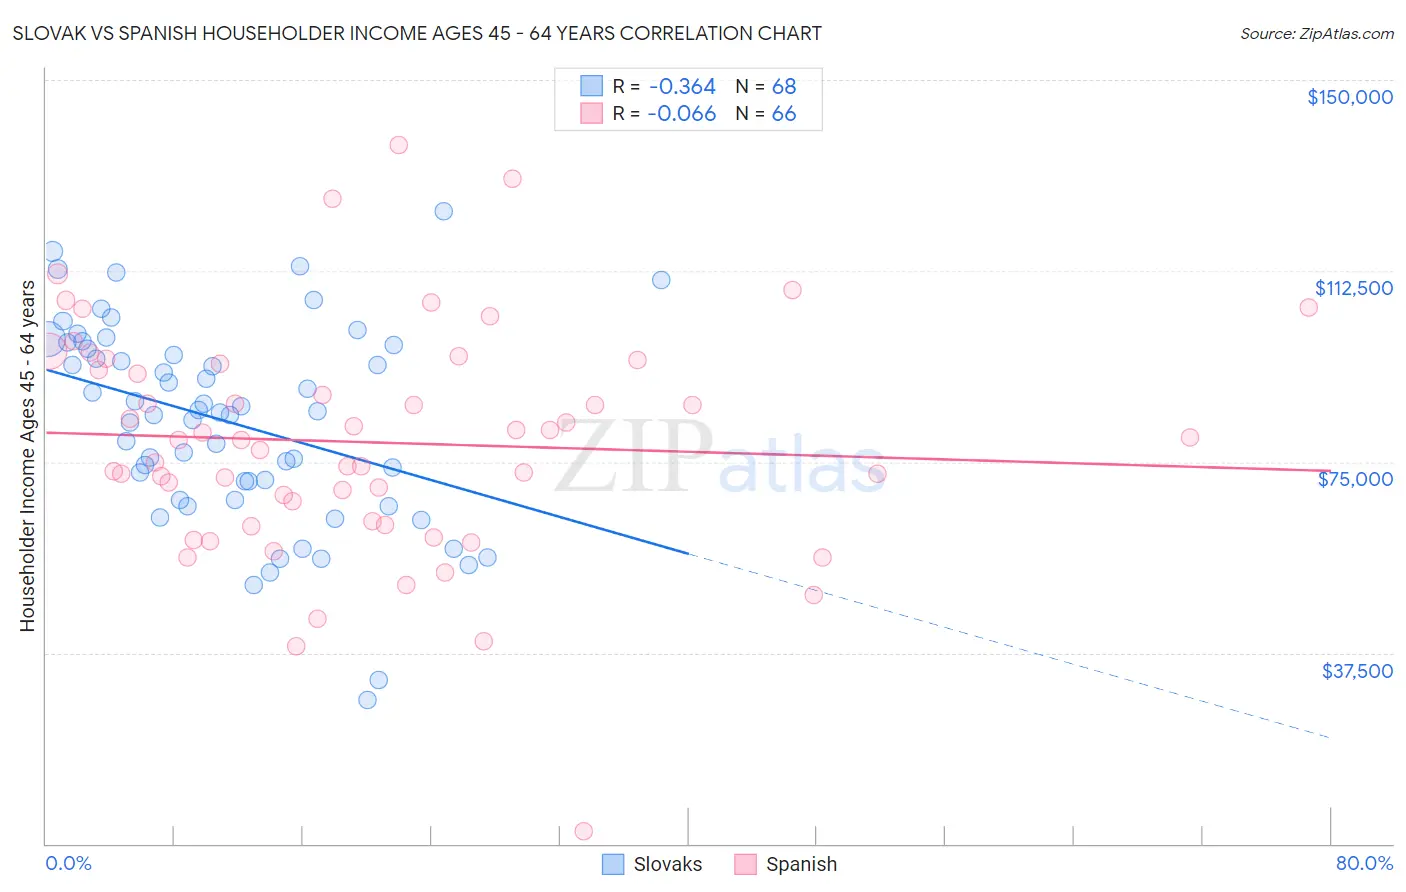 Slovak vs Spanish Householder Income Ages 45 - 64 years